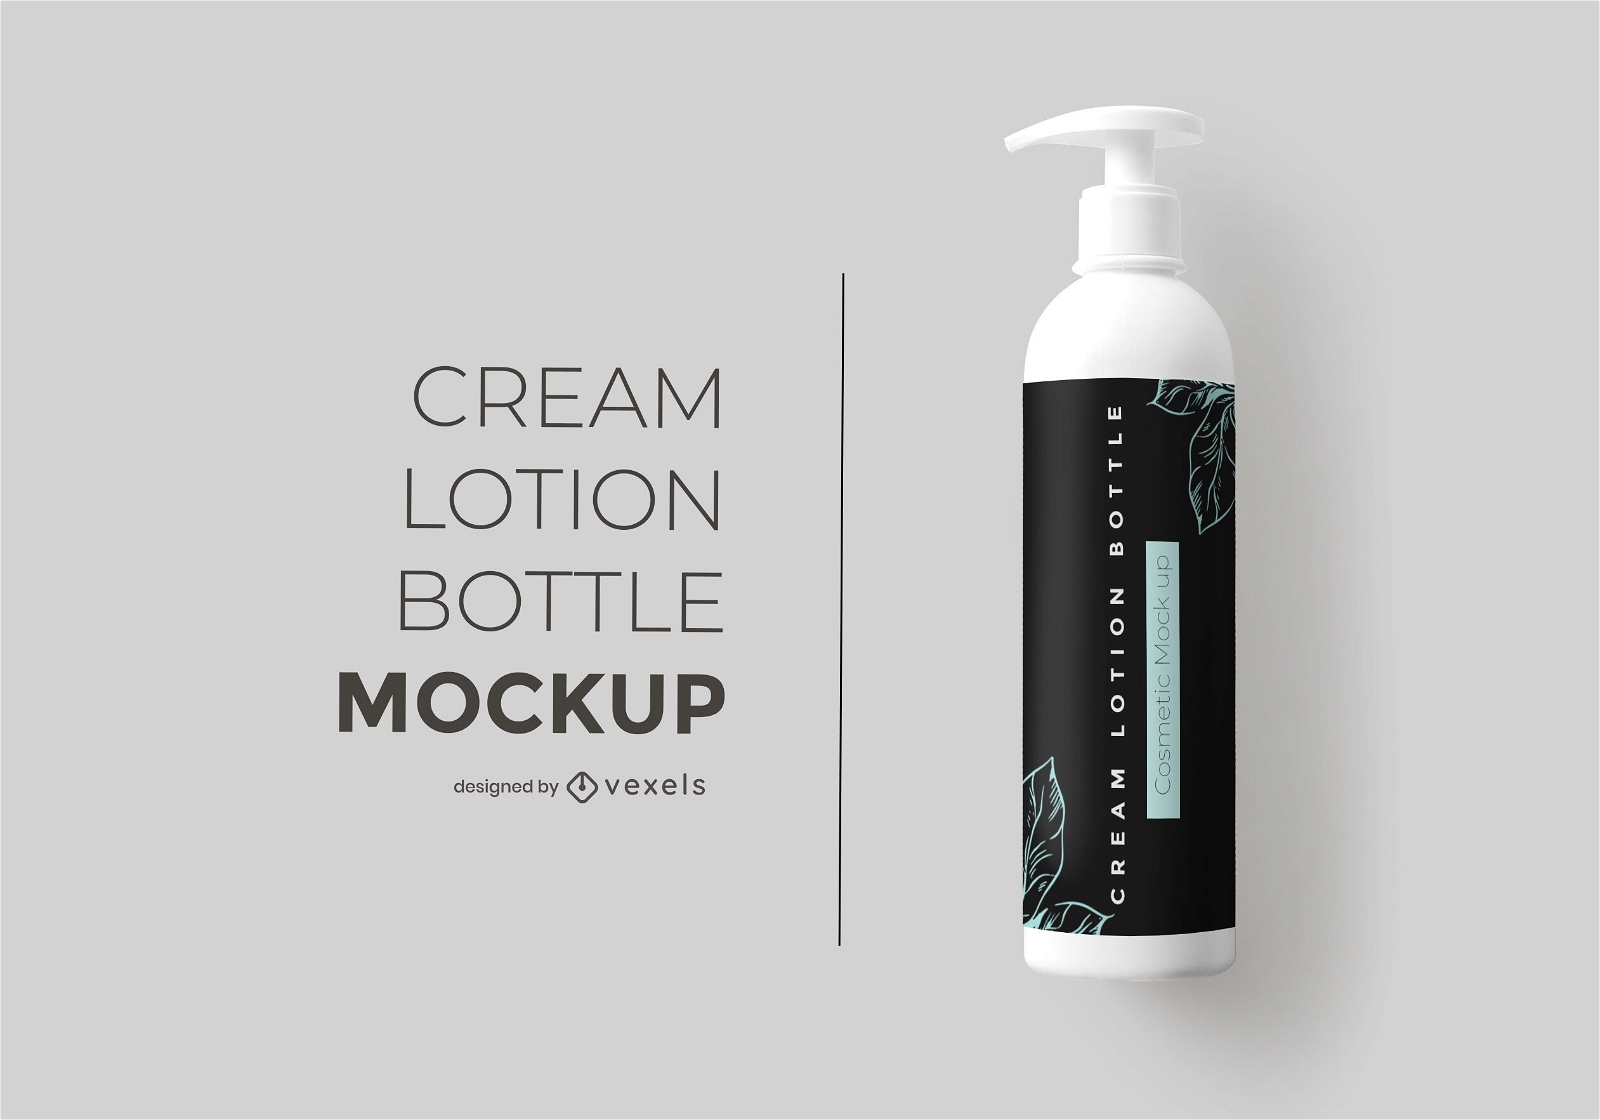 Cream lotion bottle mockup design